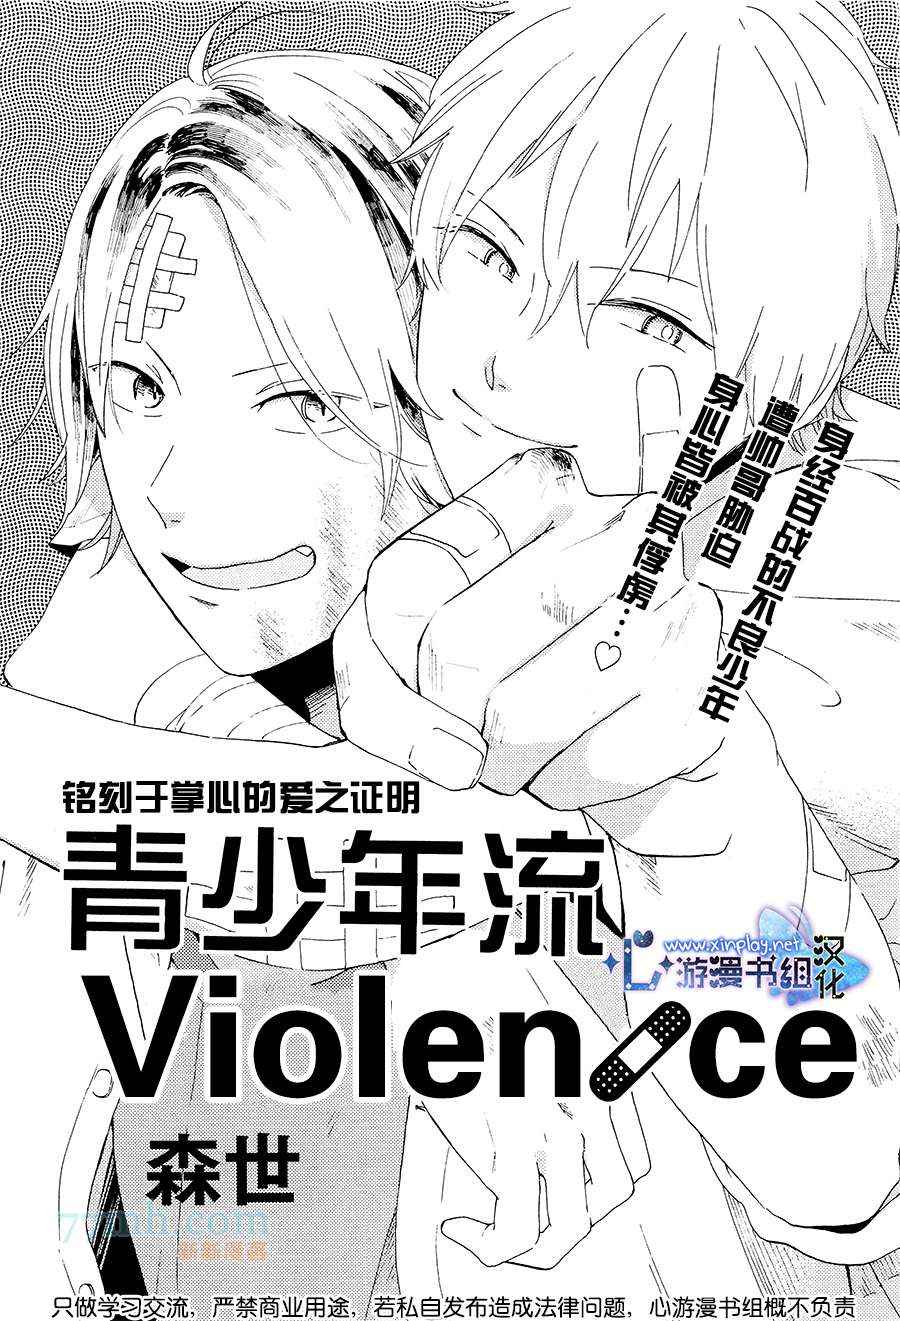 《青少年流Violence》漫画 01集